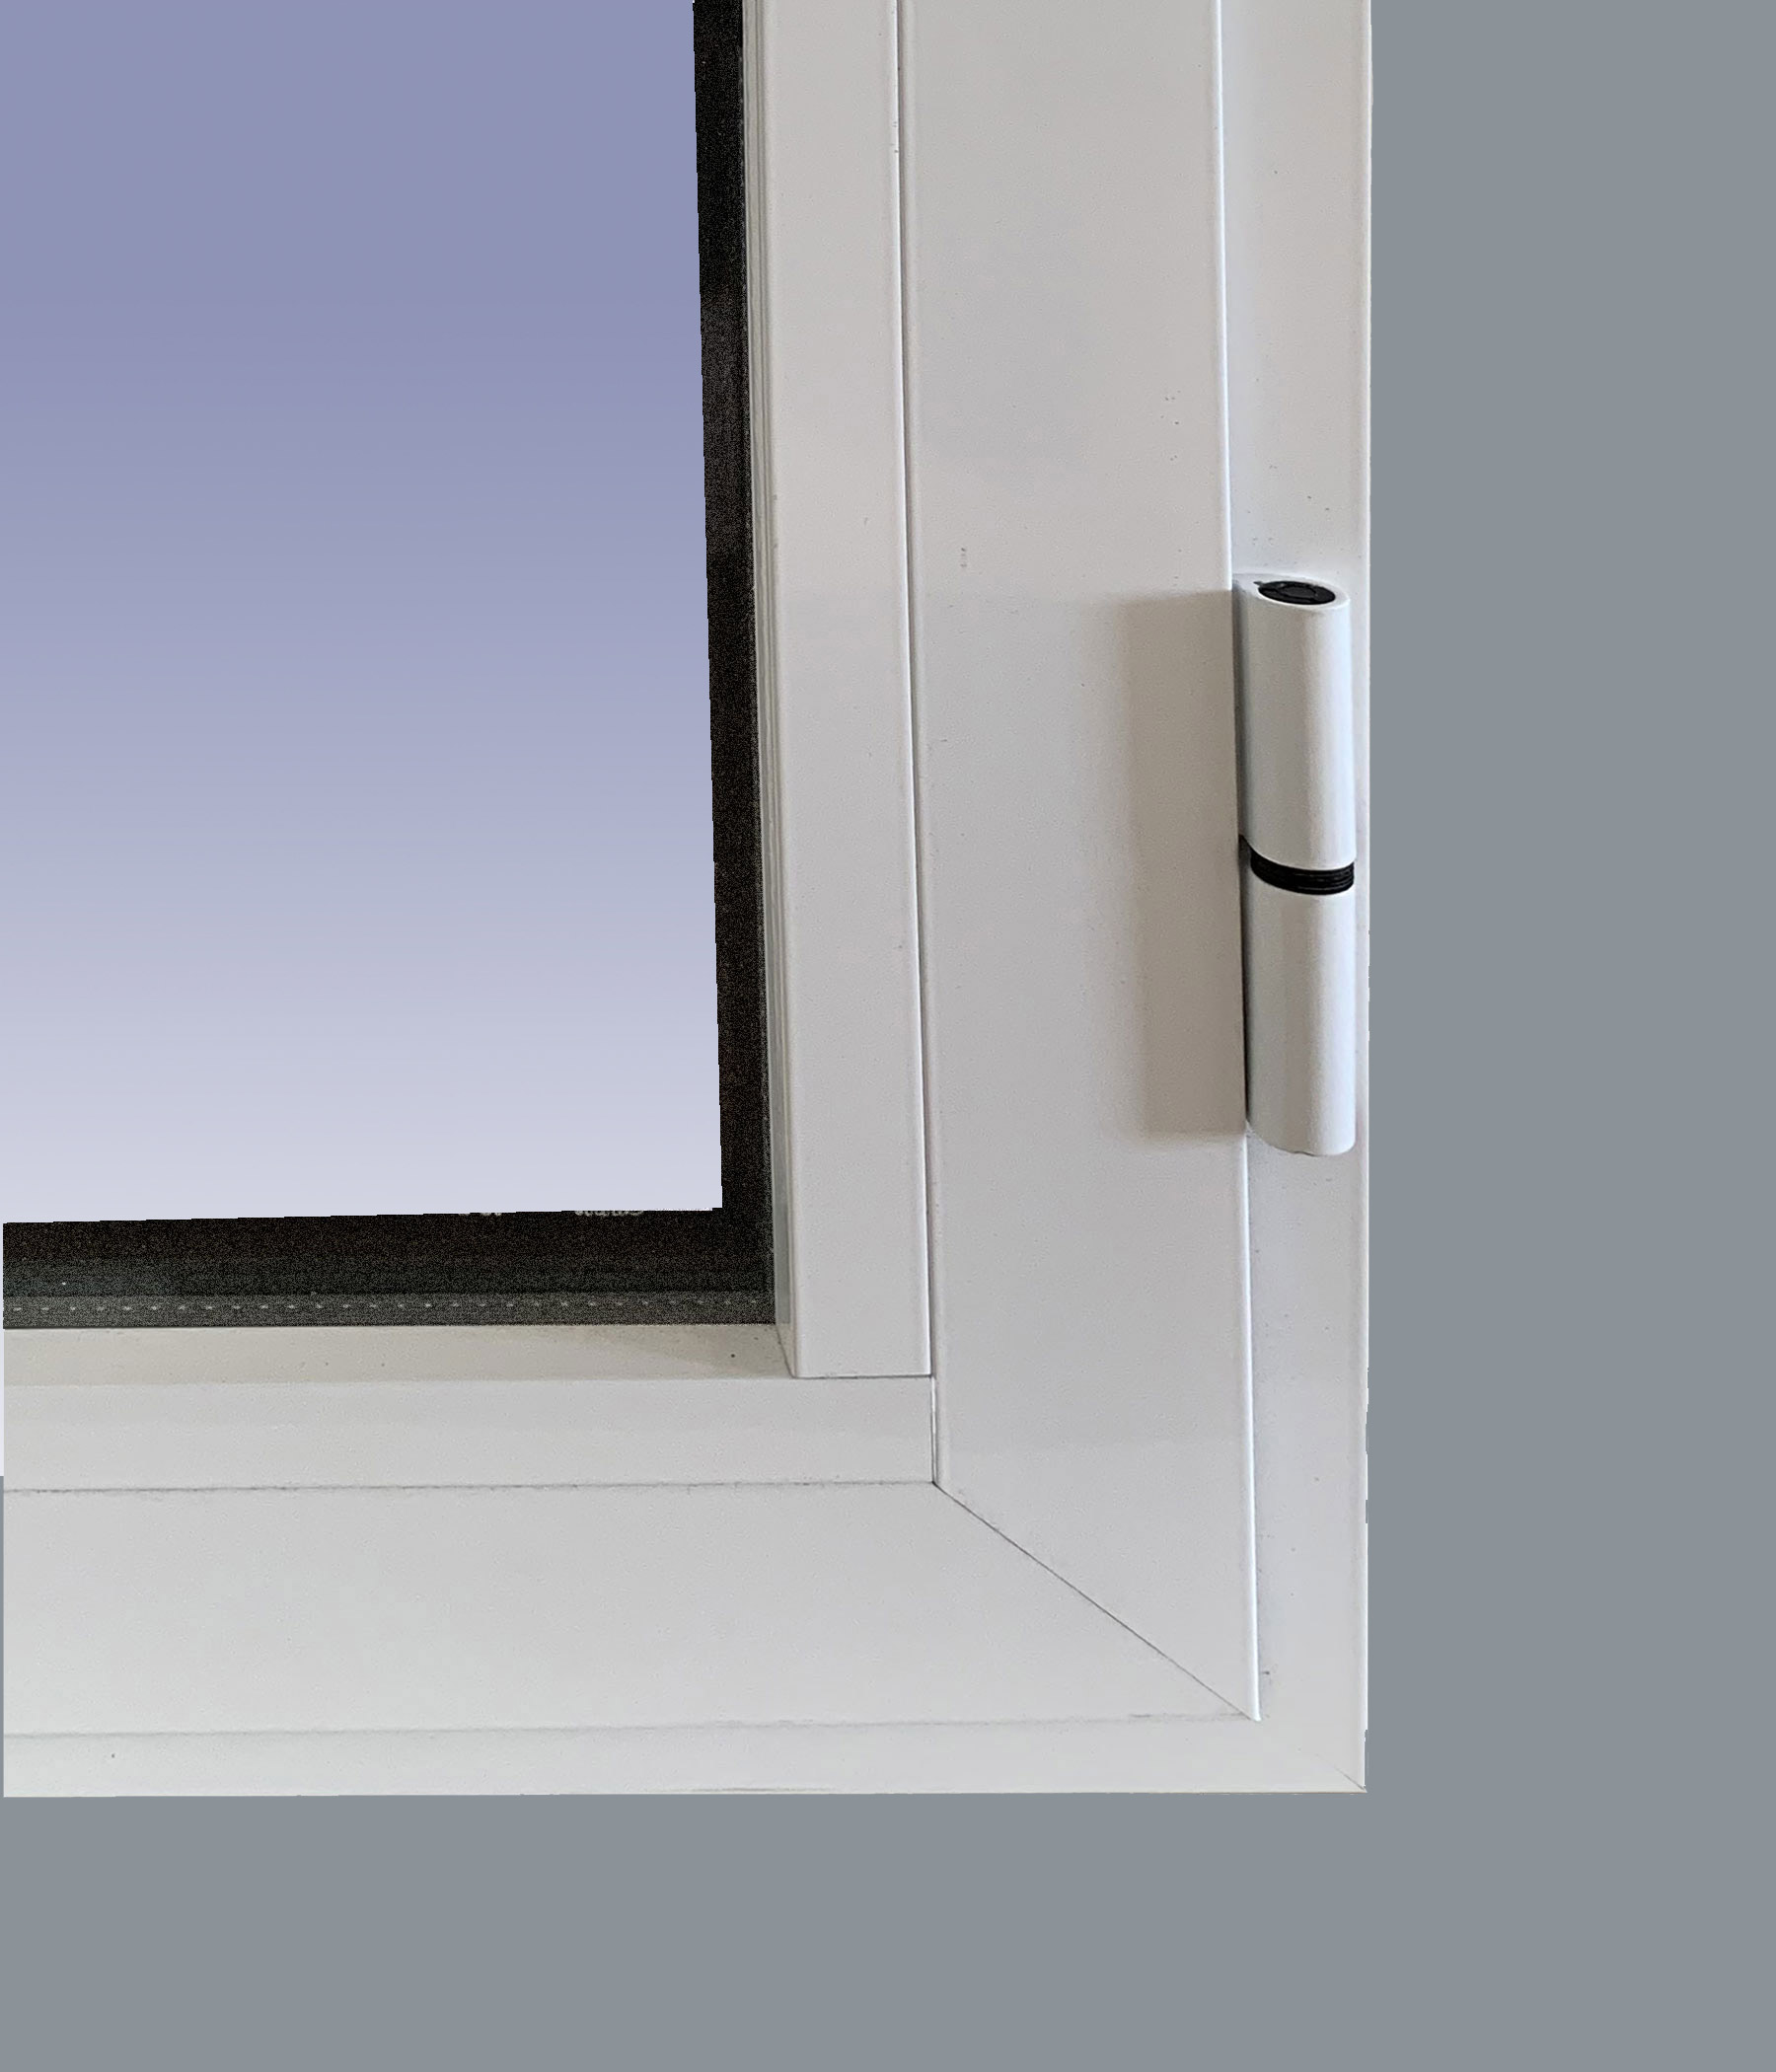 Aluminum Sliding Window With Shutter (PVC) 1200 × 1155 2h - VENTANASTOCK .ES